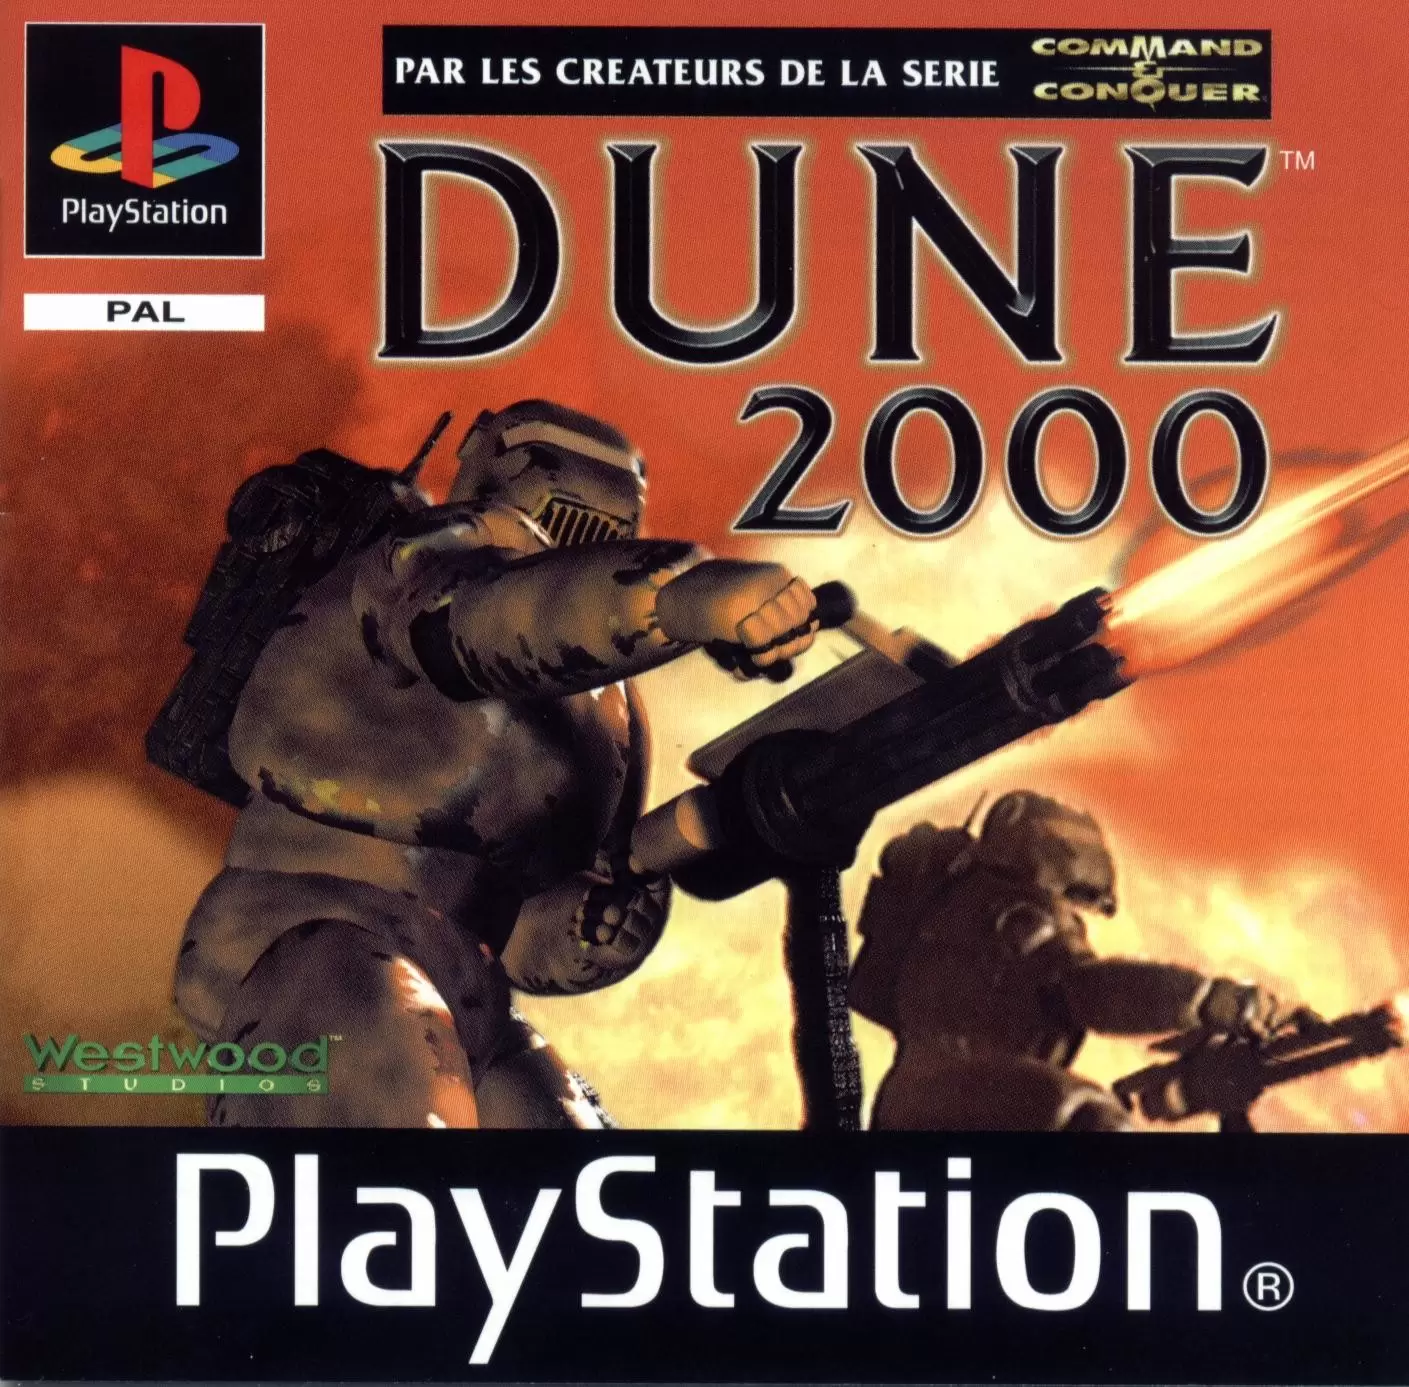 Playstation games - Dune 2000